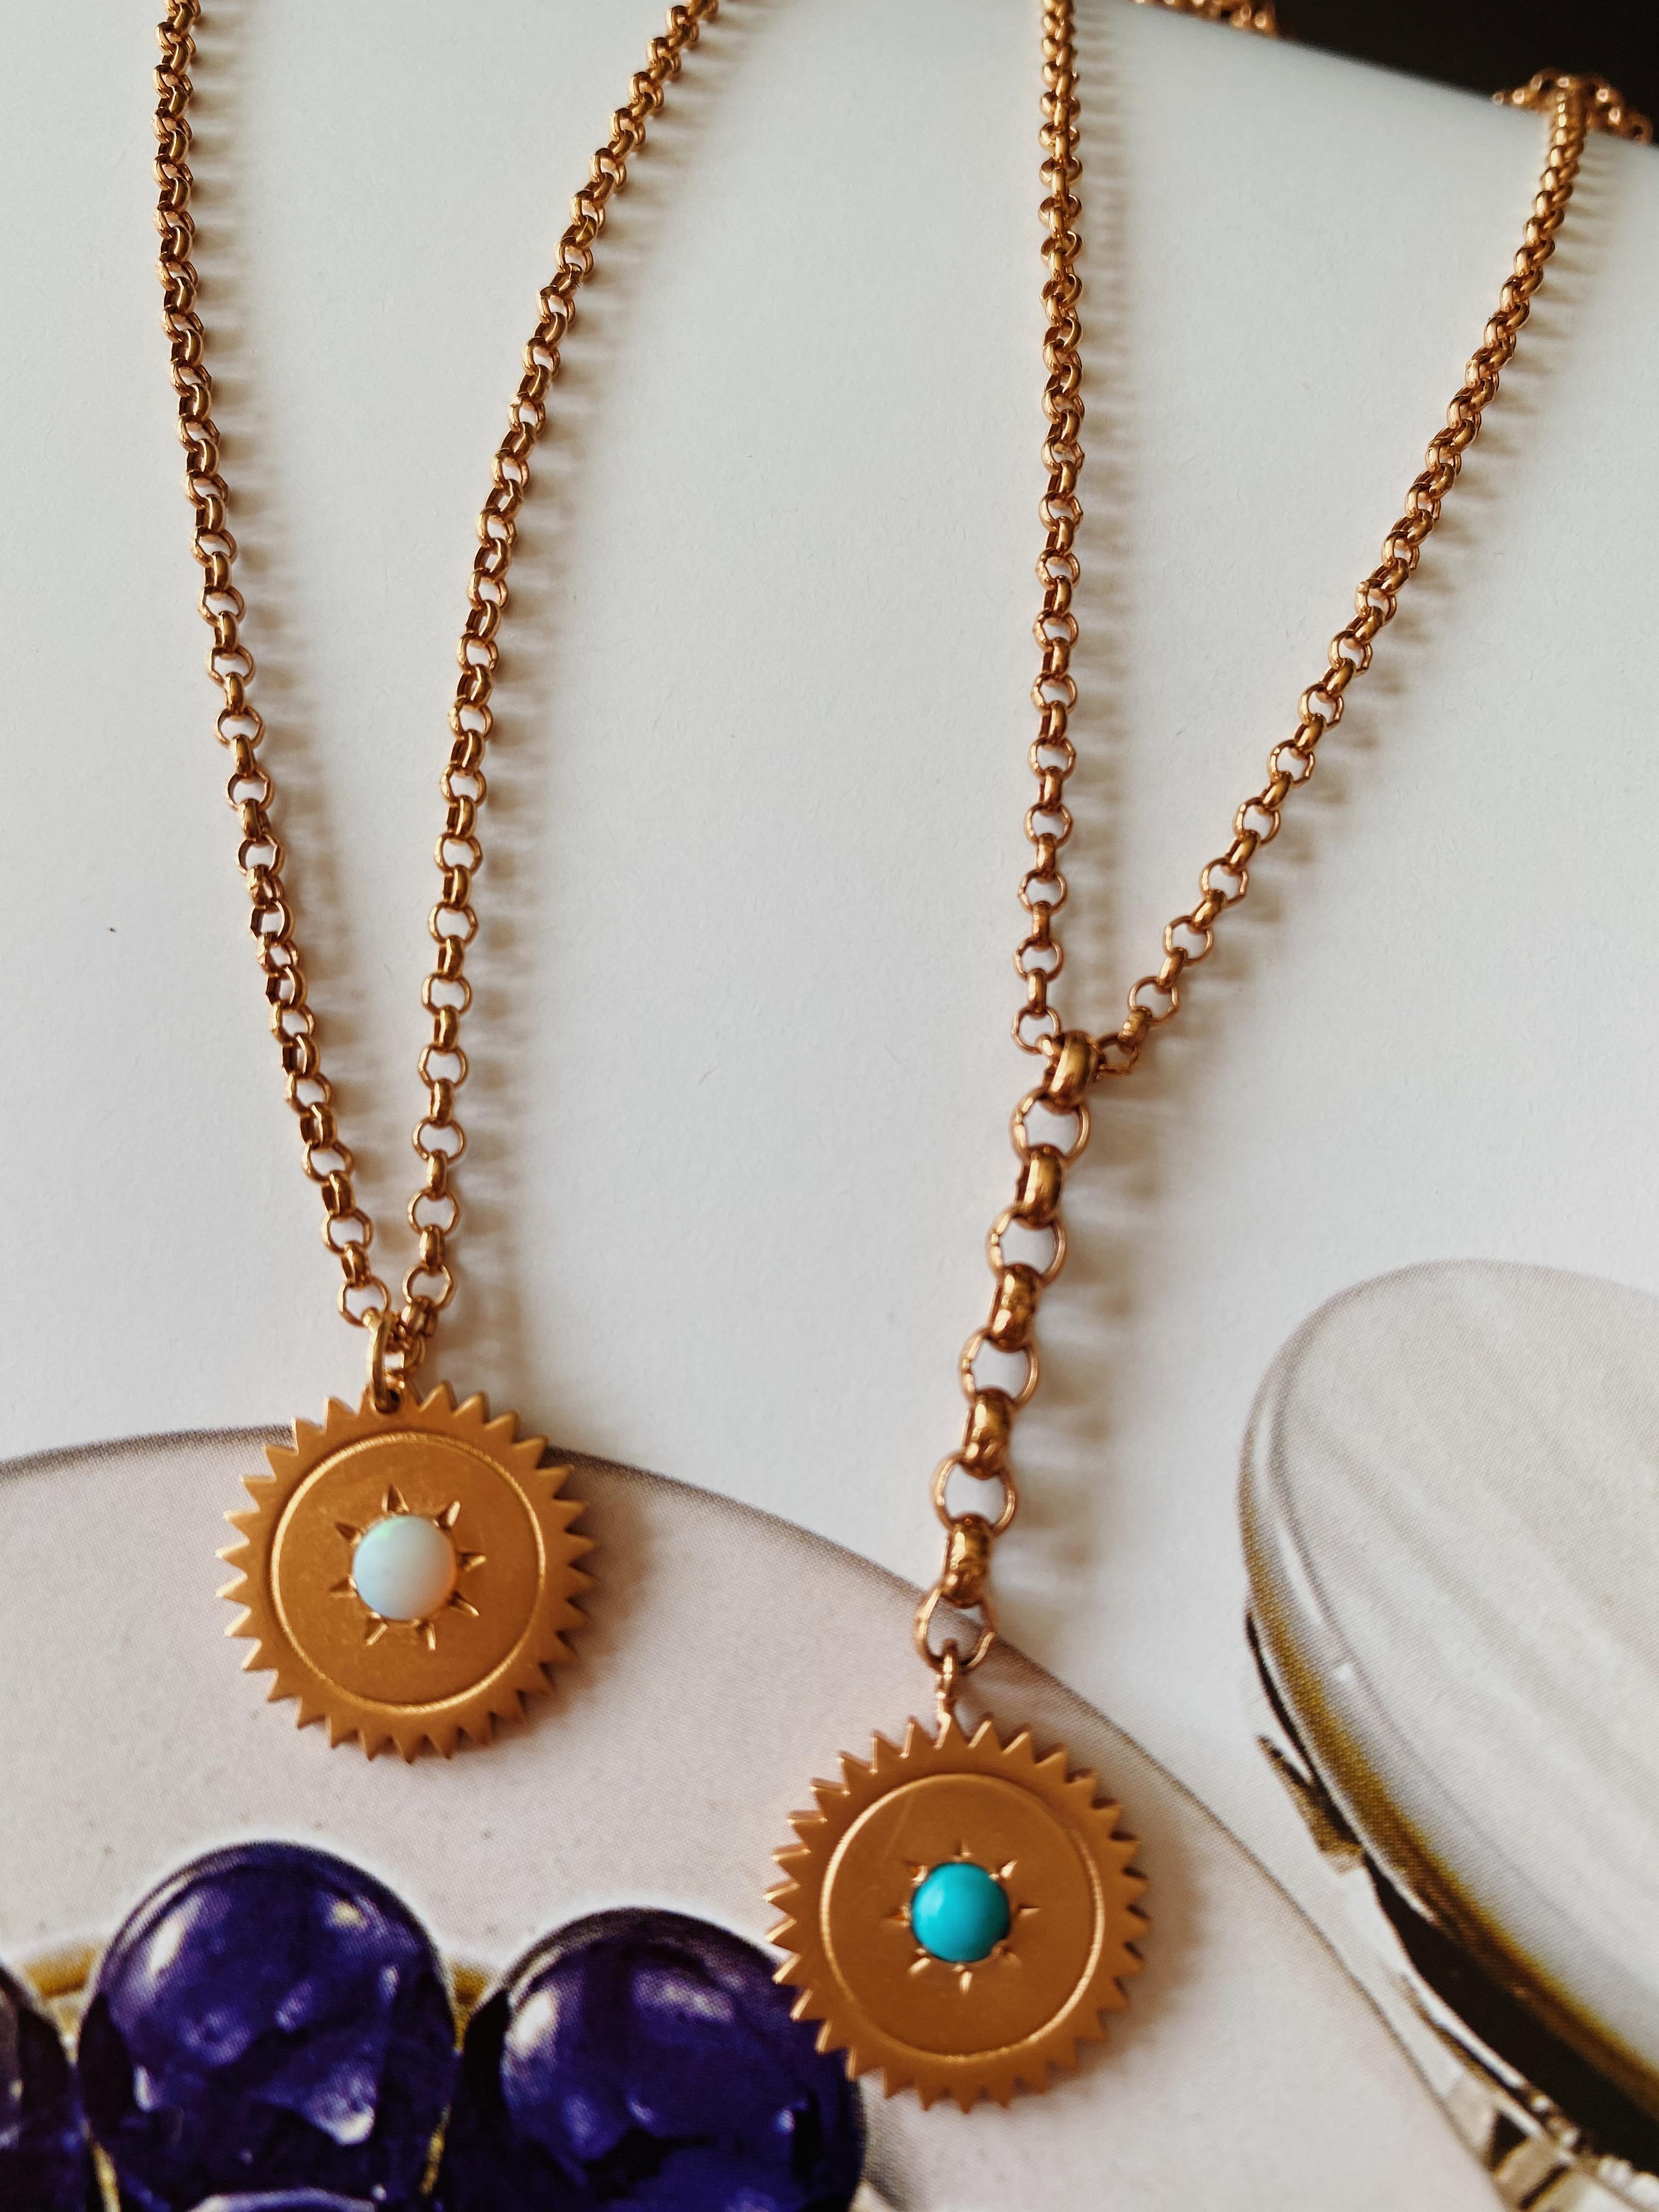 Citrine birthstone necklace in 14k rose gold – november by Selda Jewellery

Additional Information:-
Collection: Birthstone collection
14K Rose gold
Pendant diameter 1.5cm
Chain length 44cm